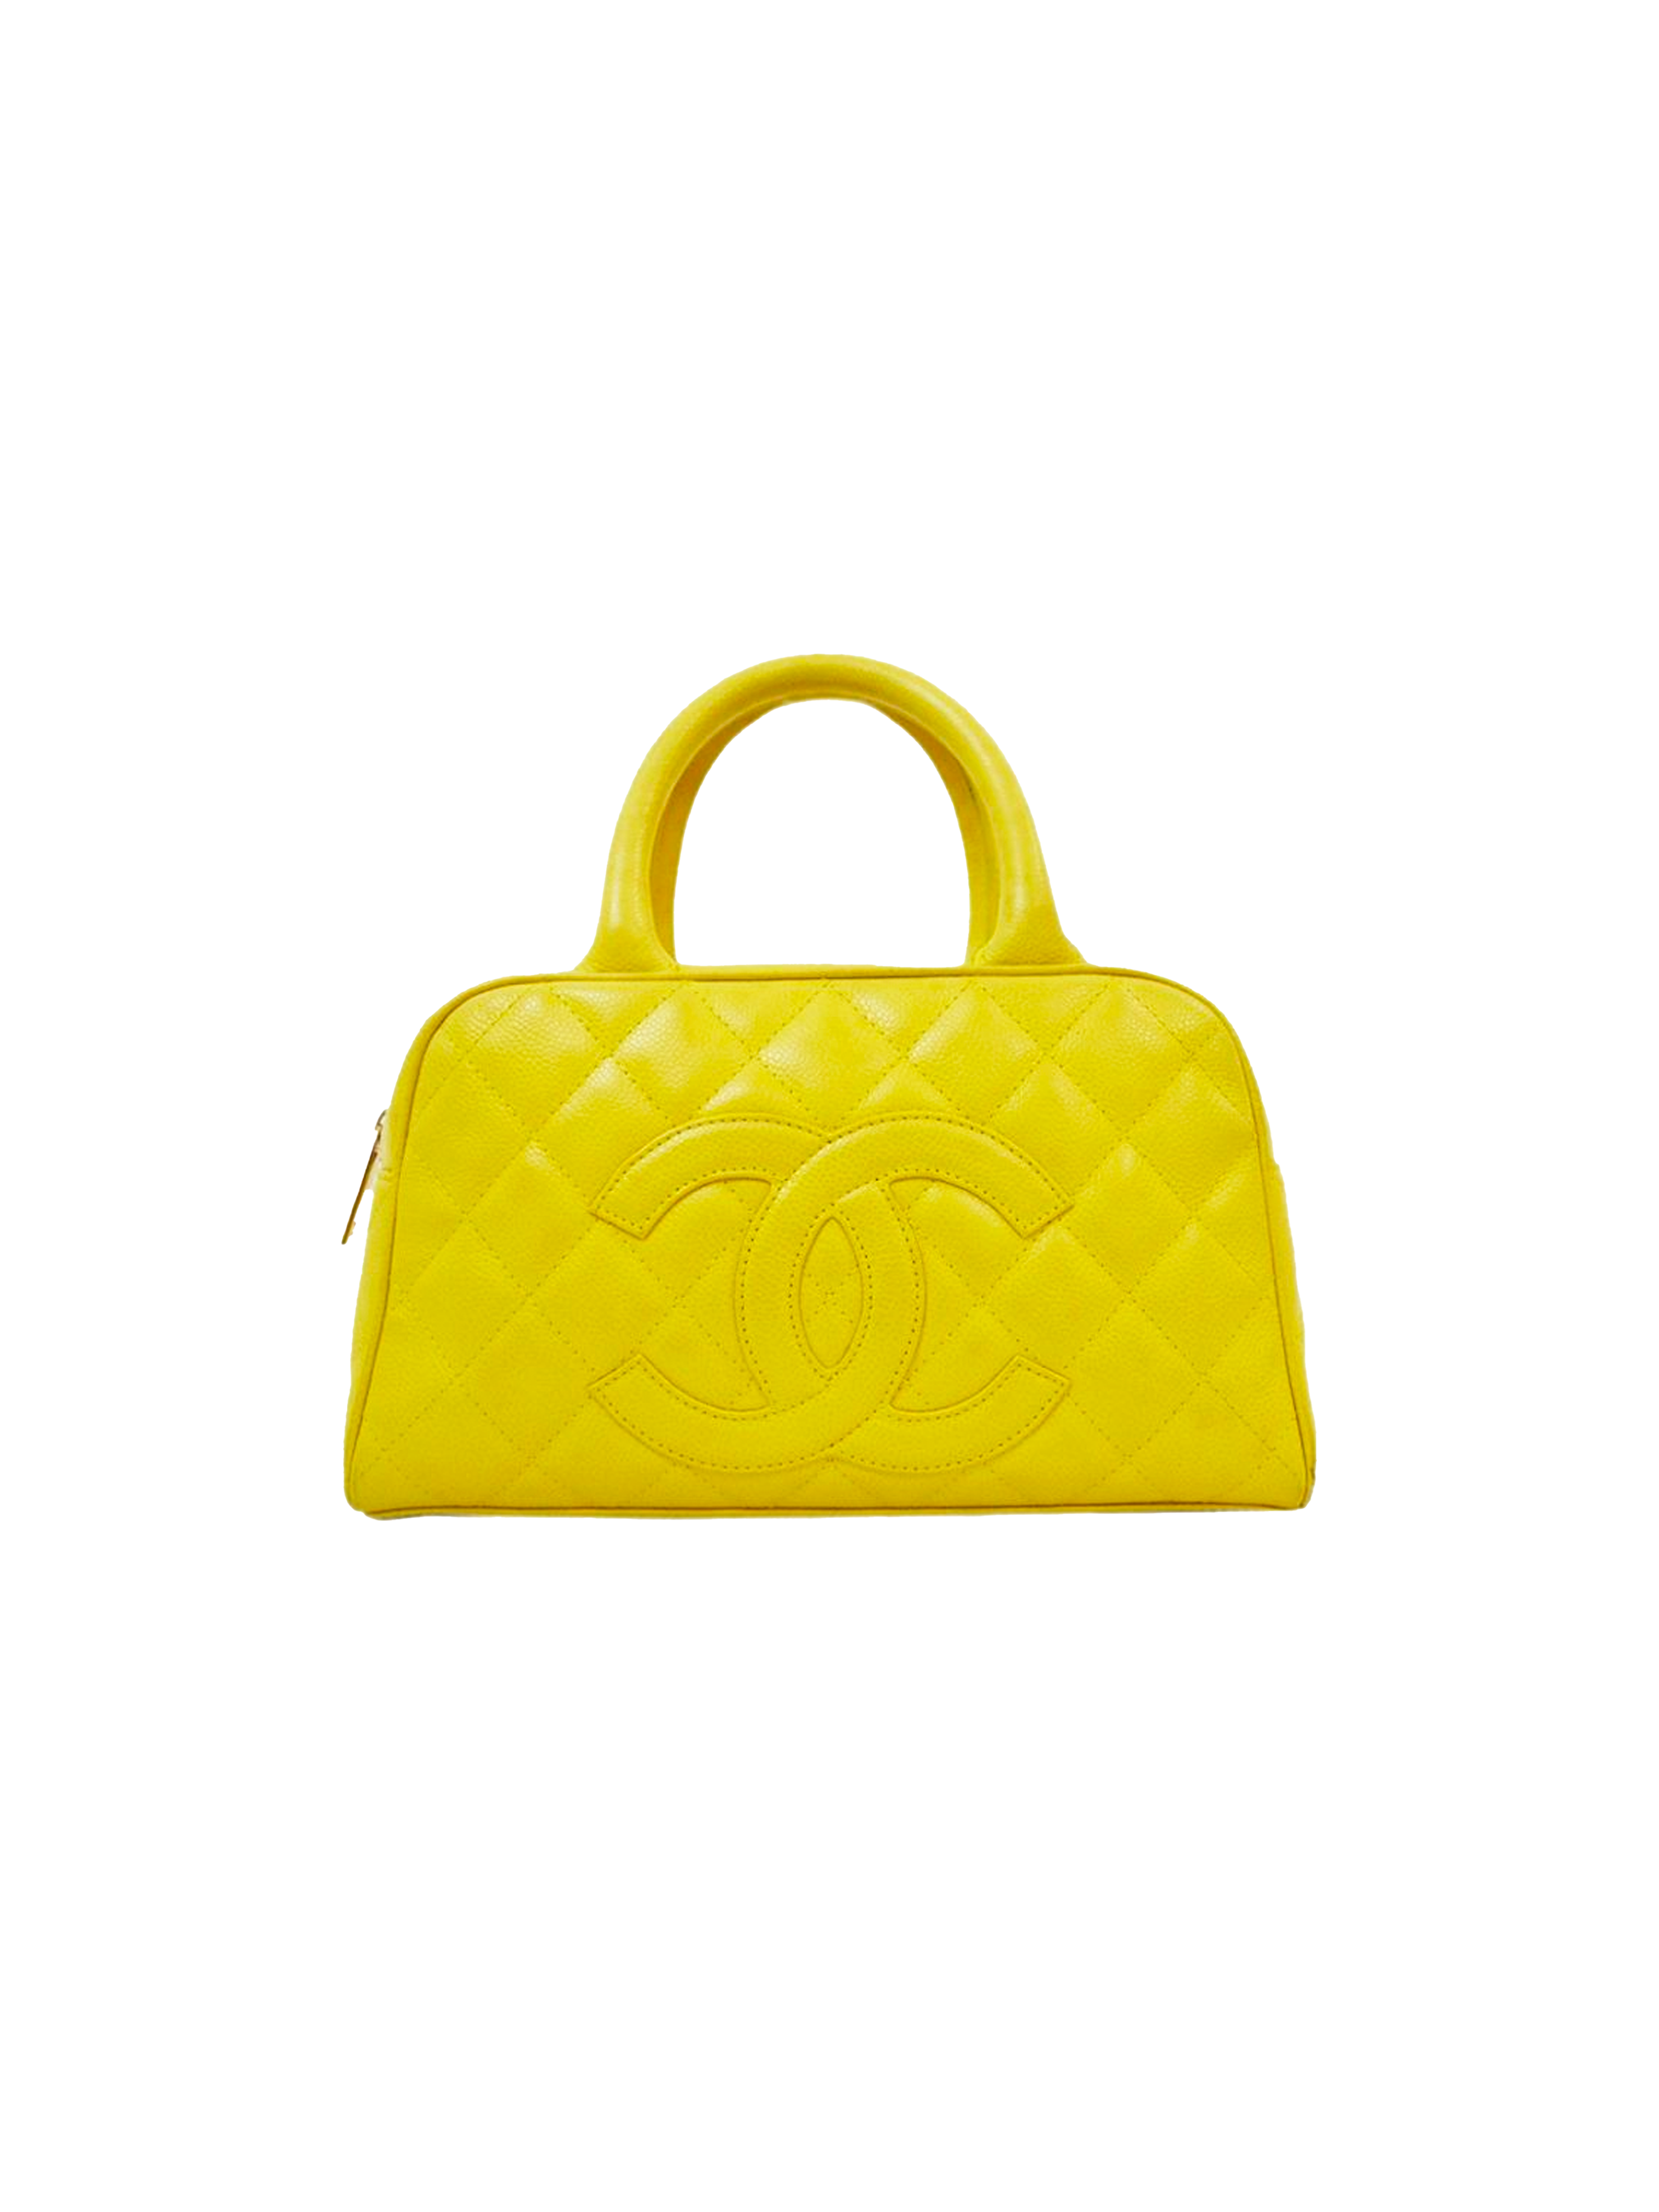 Chanel 2005 Yellow Caviar Bowling Bag · INTO